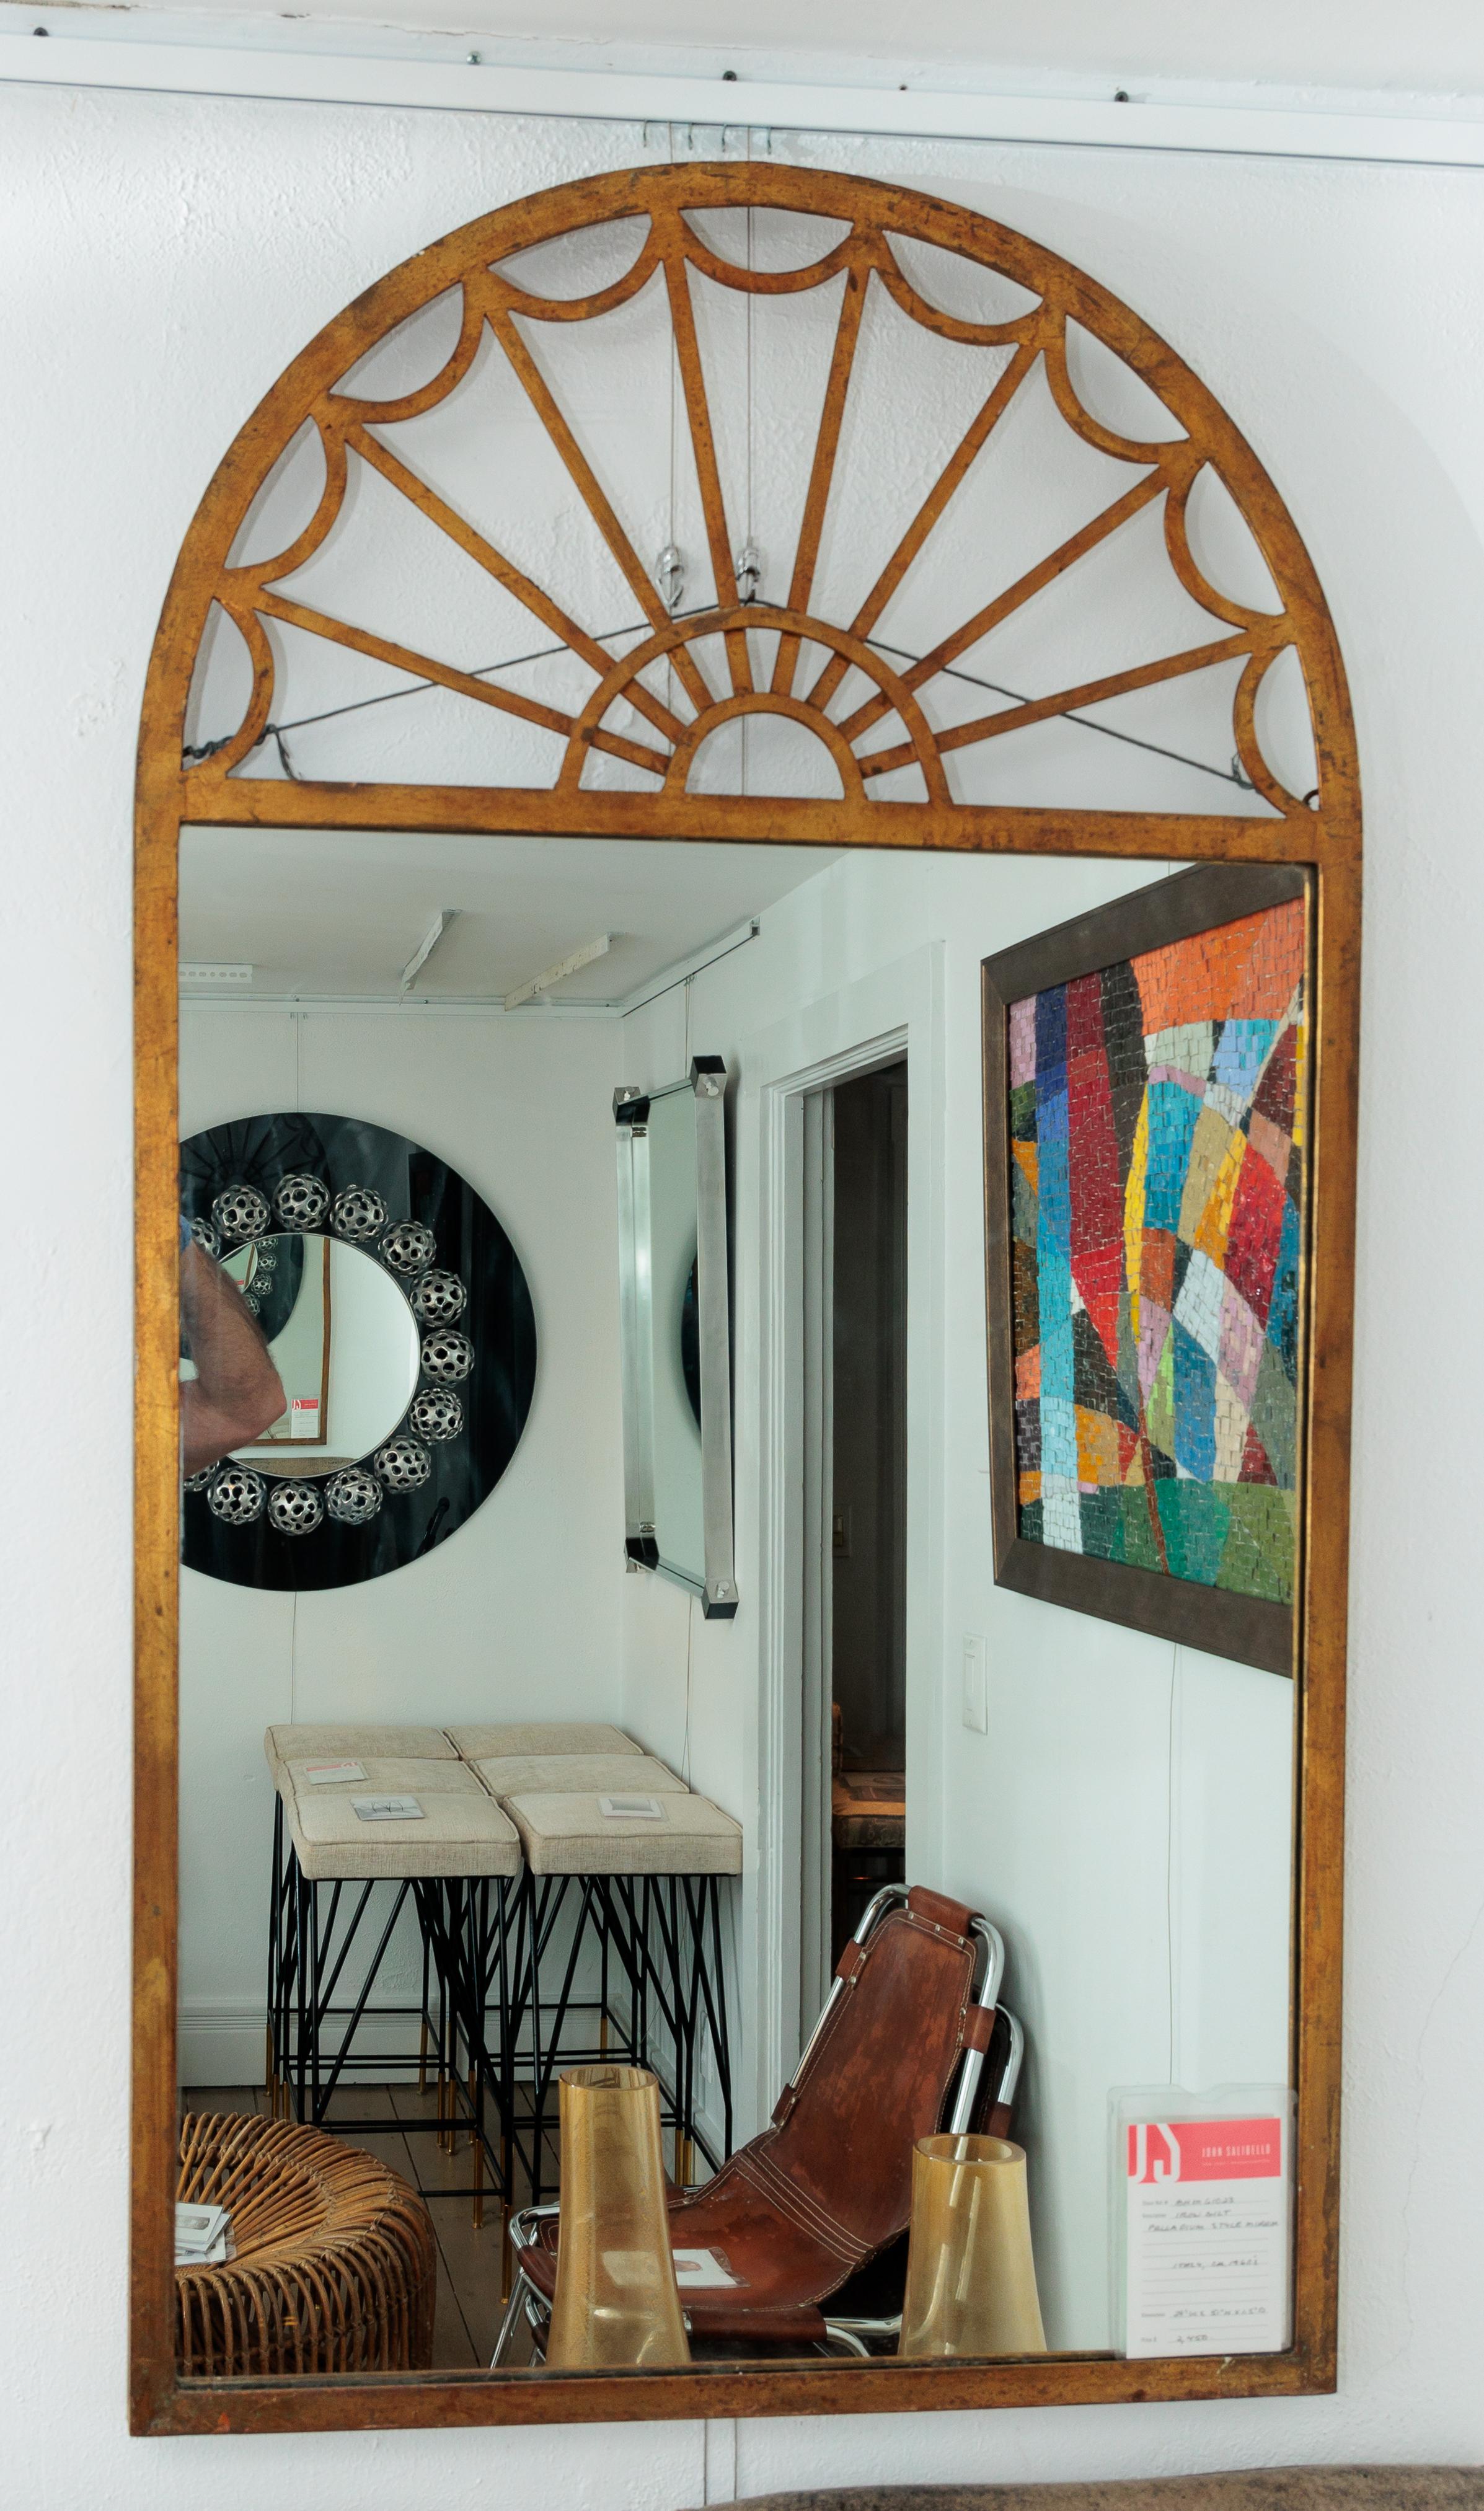 The mirror is an unusual style, palladium rarely seen.